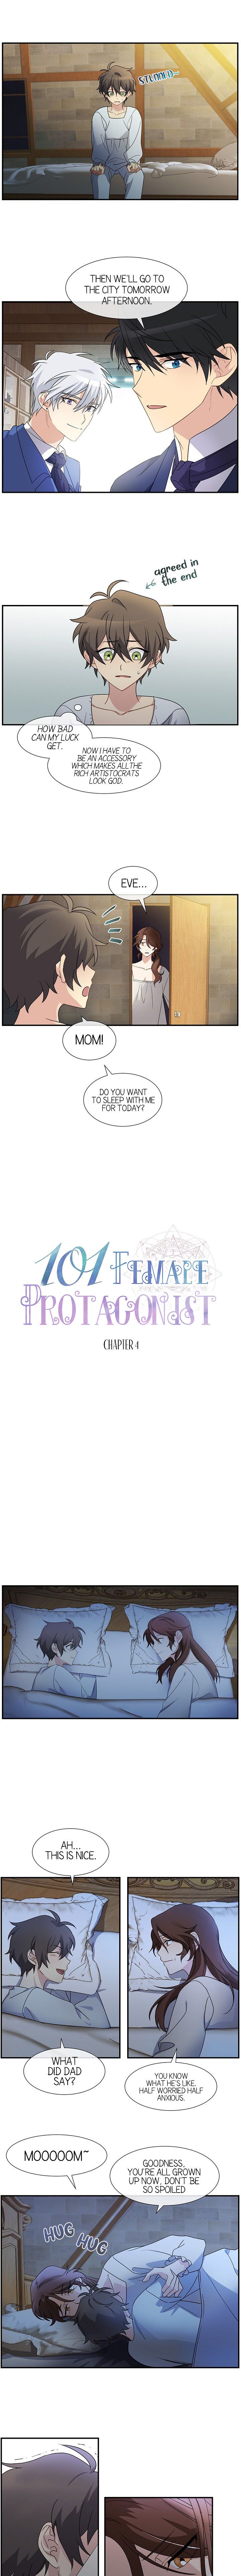 101 Female Protagonist